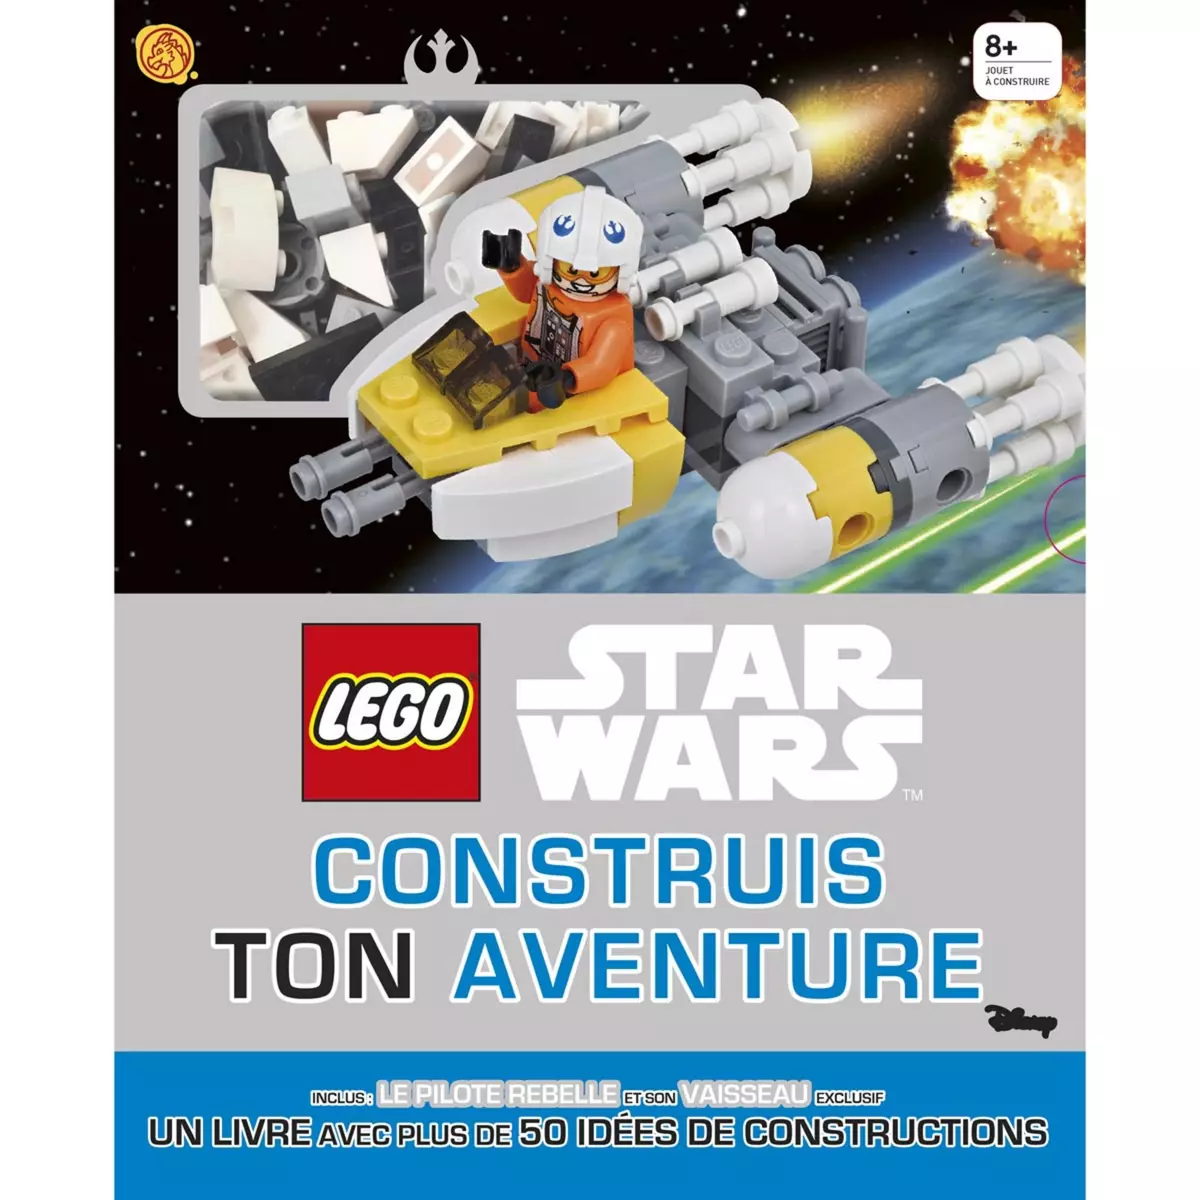 LEGO STAR WARS:CONSTRUIS TON AVENTURE !